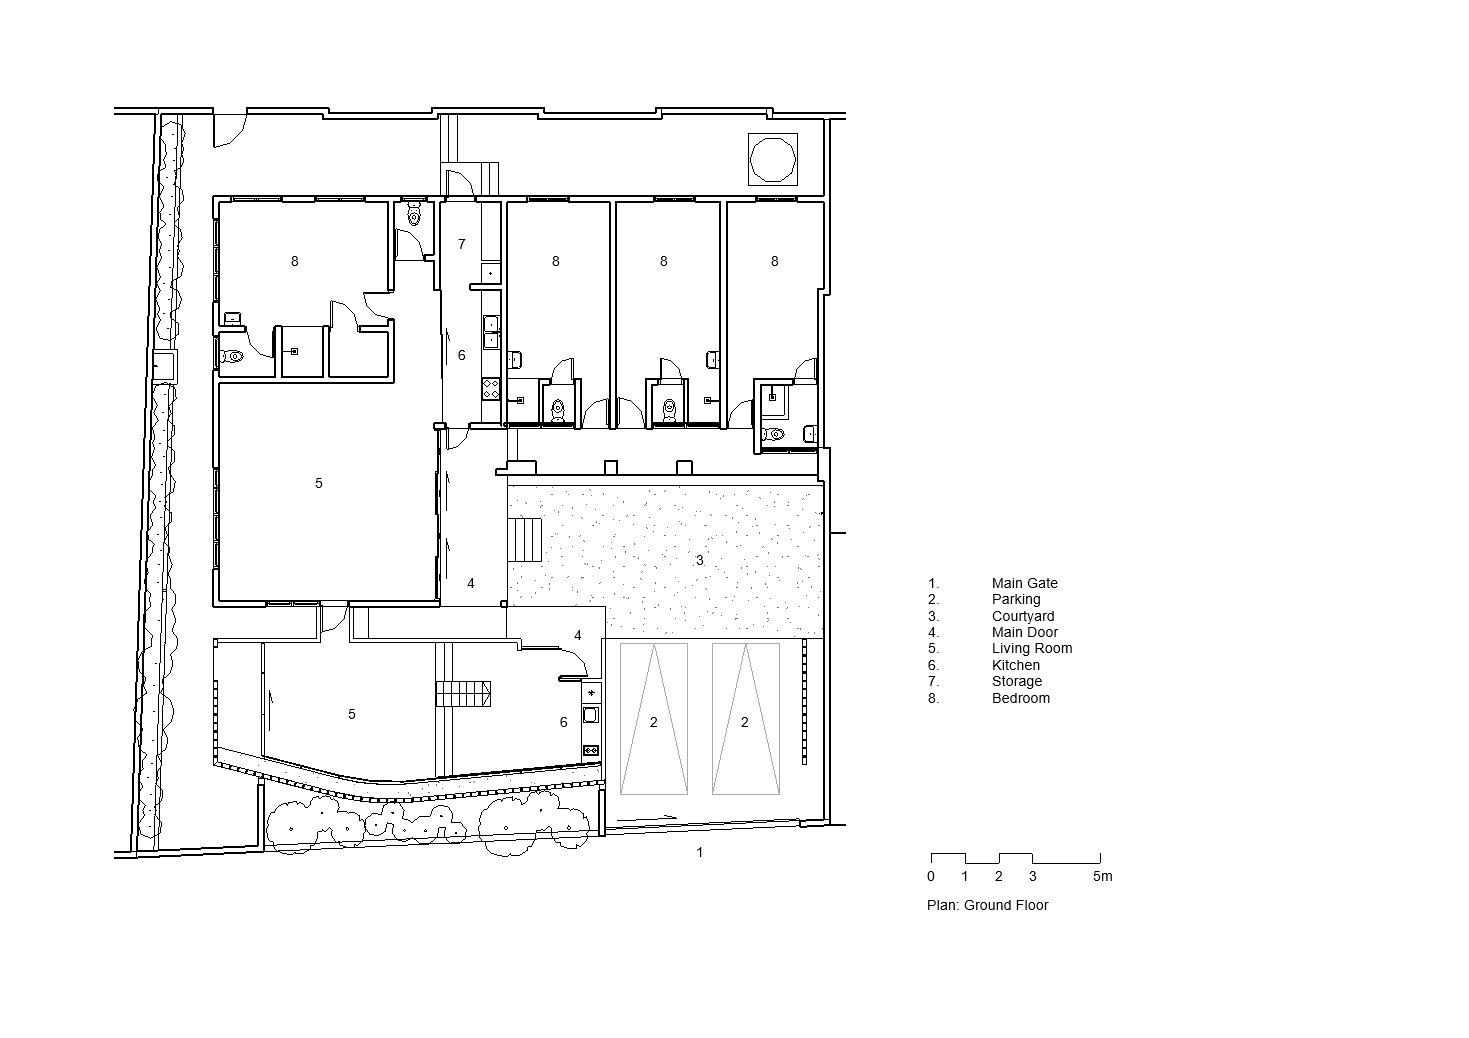 2020-07-15 - P - Sheet - A-CD-102 - Ground Floor Plan - New_cropped.jpg